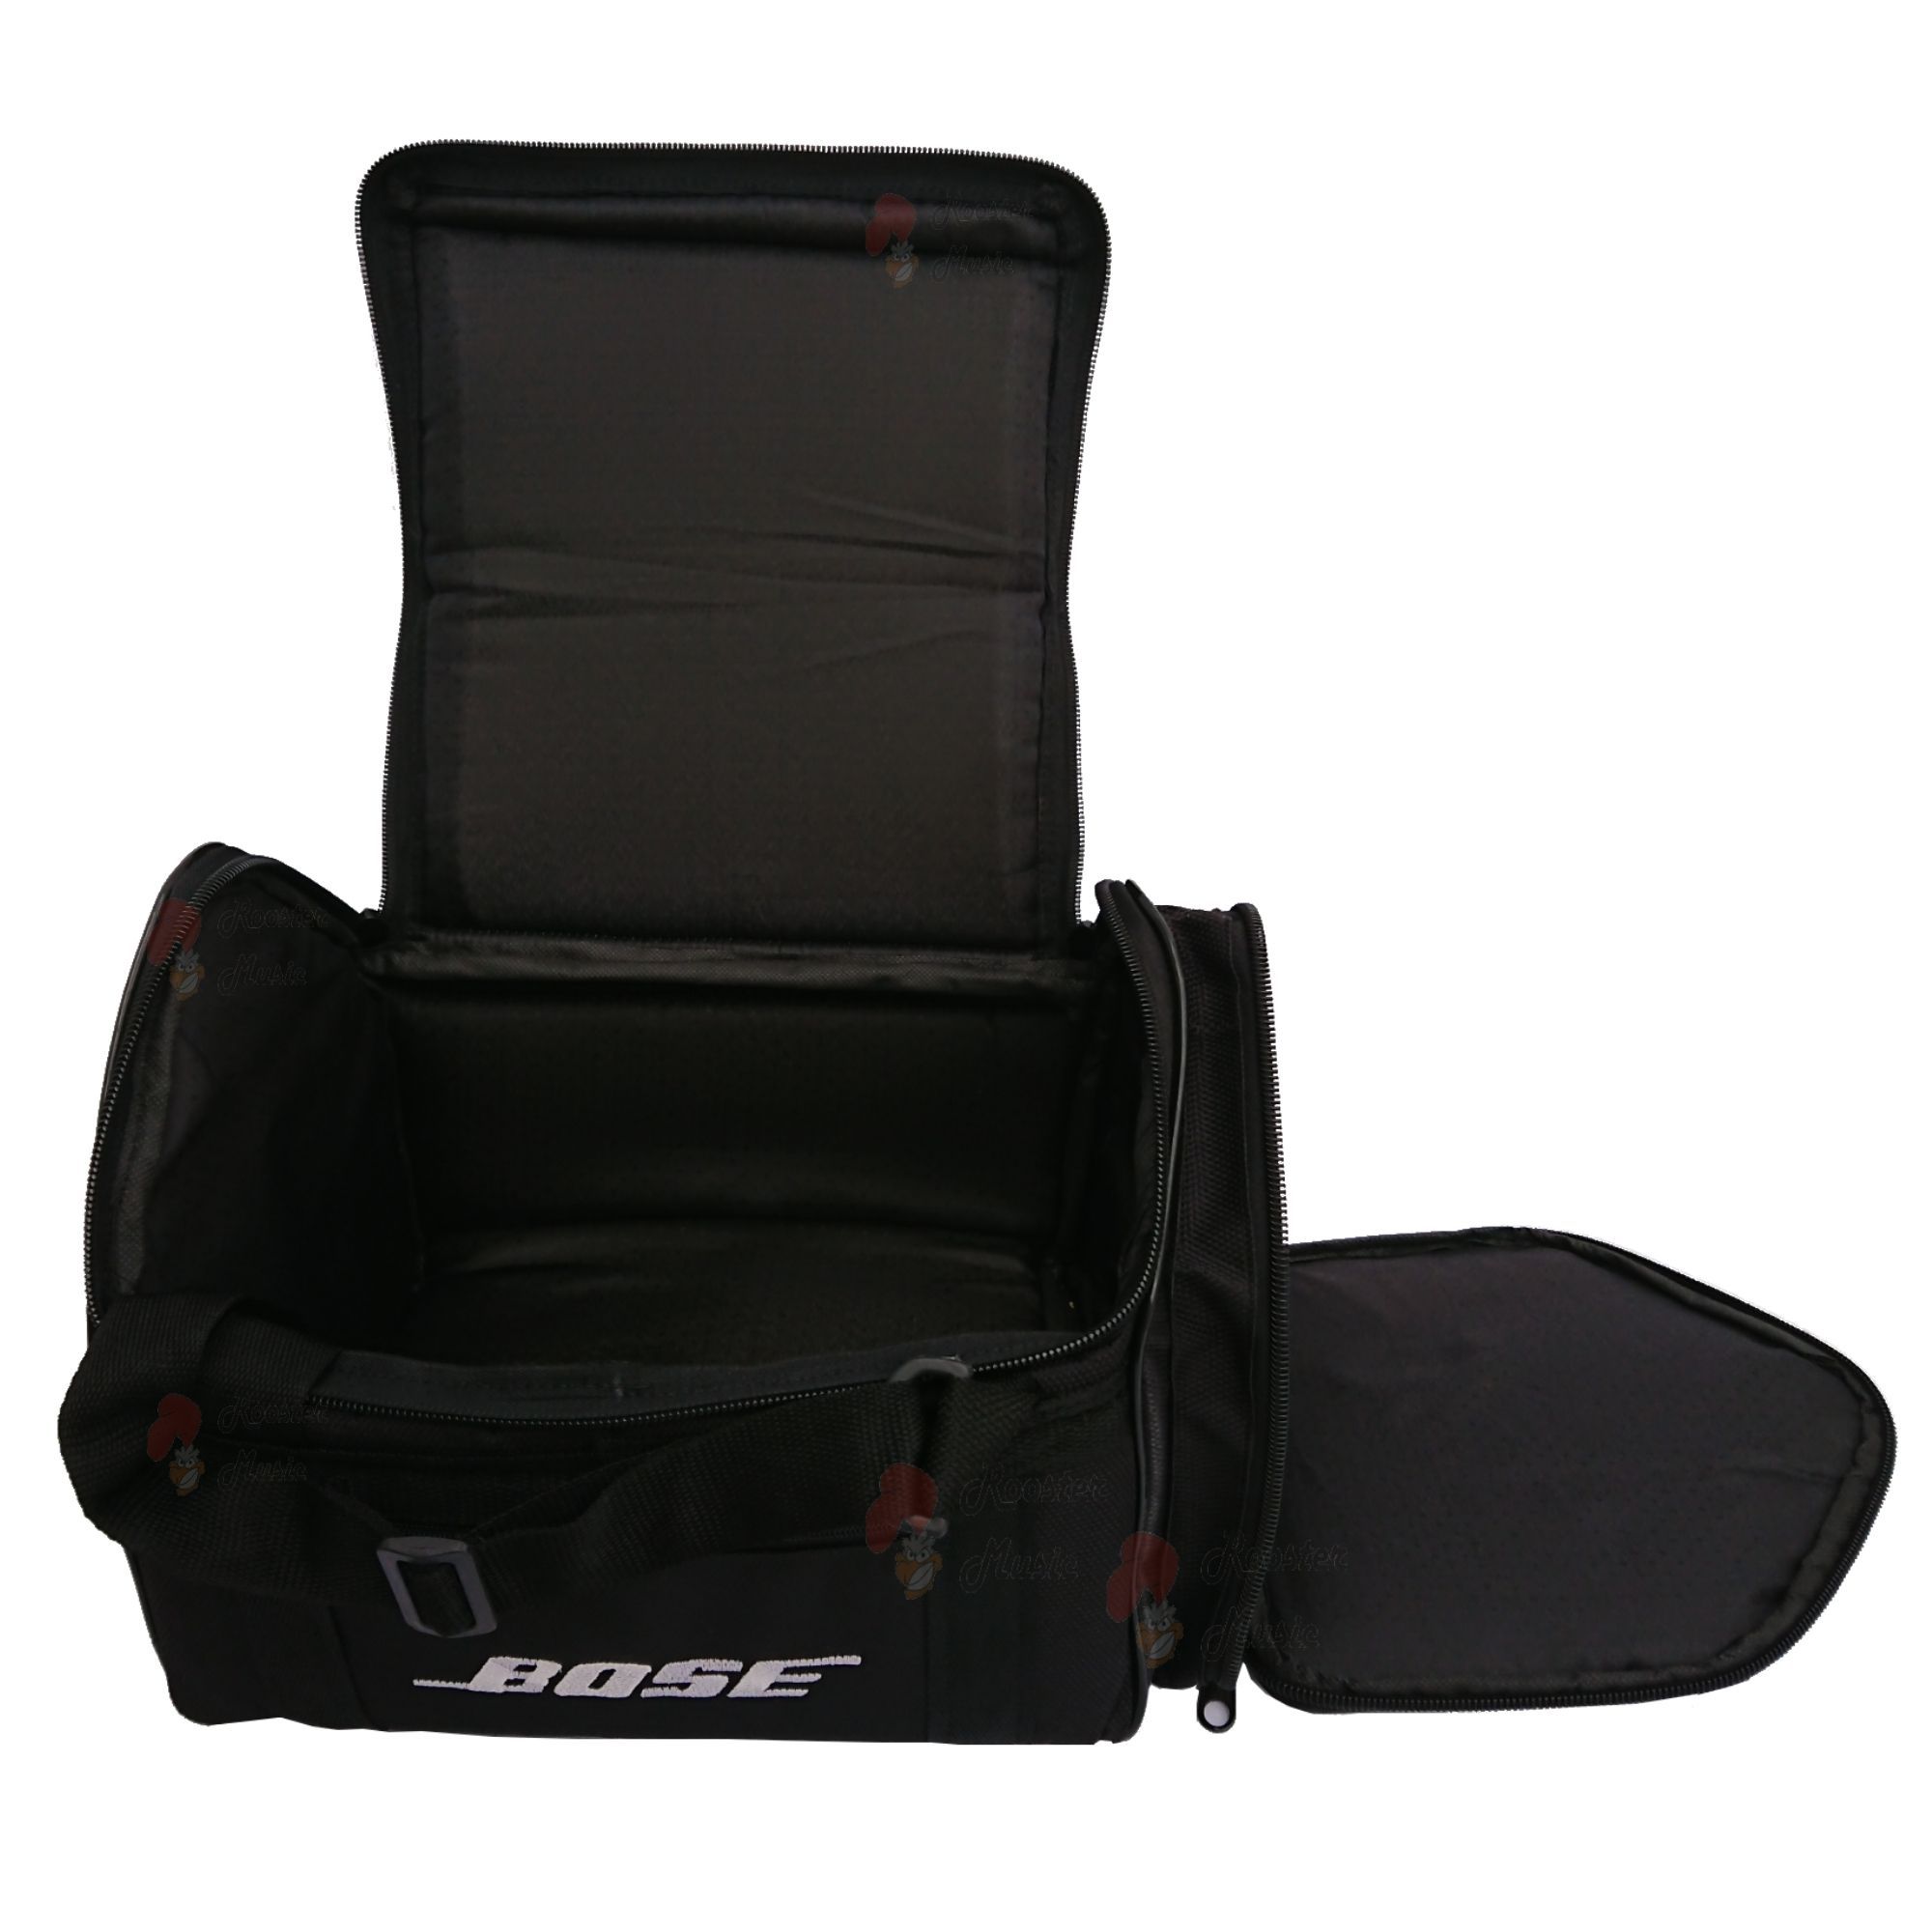 Capa Bag para Caixa de Som Bose S1 Pro. Modelo Semi Case Premium (34x25x27).